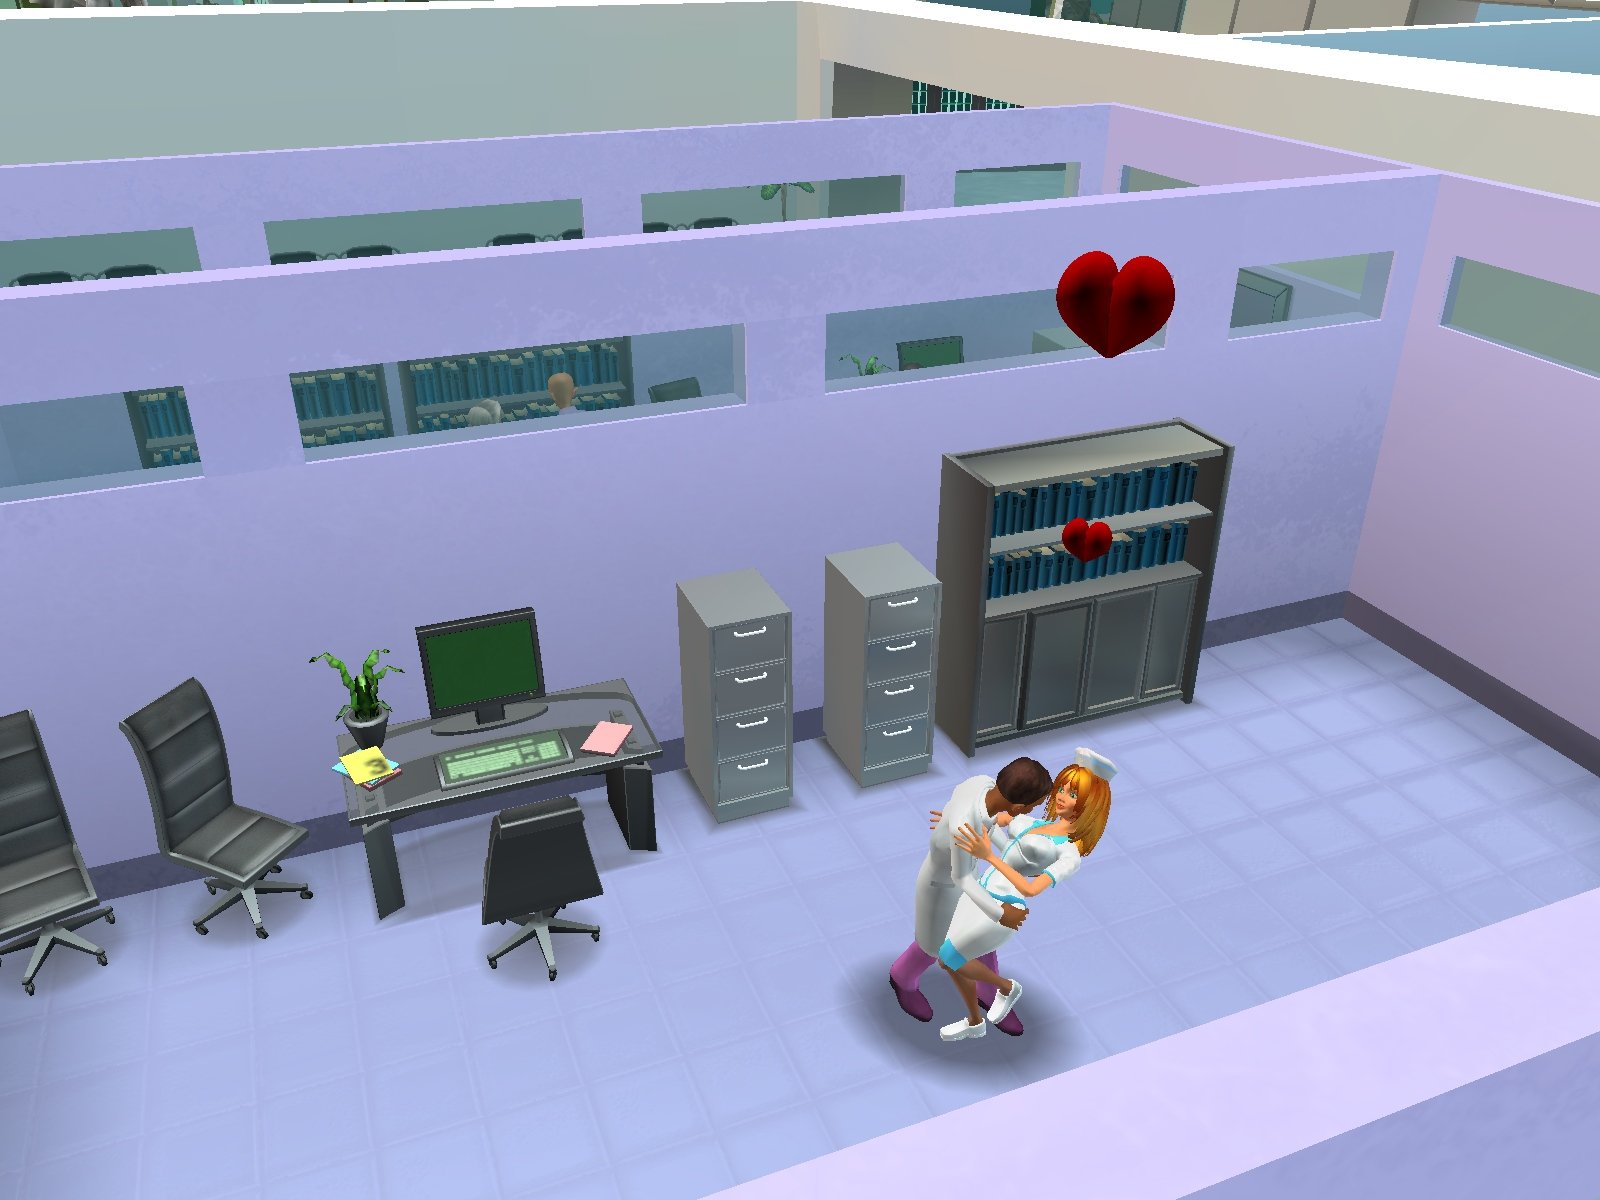 Hospital Tycoon screenshot